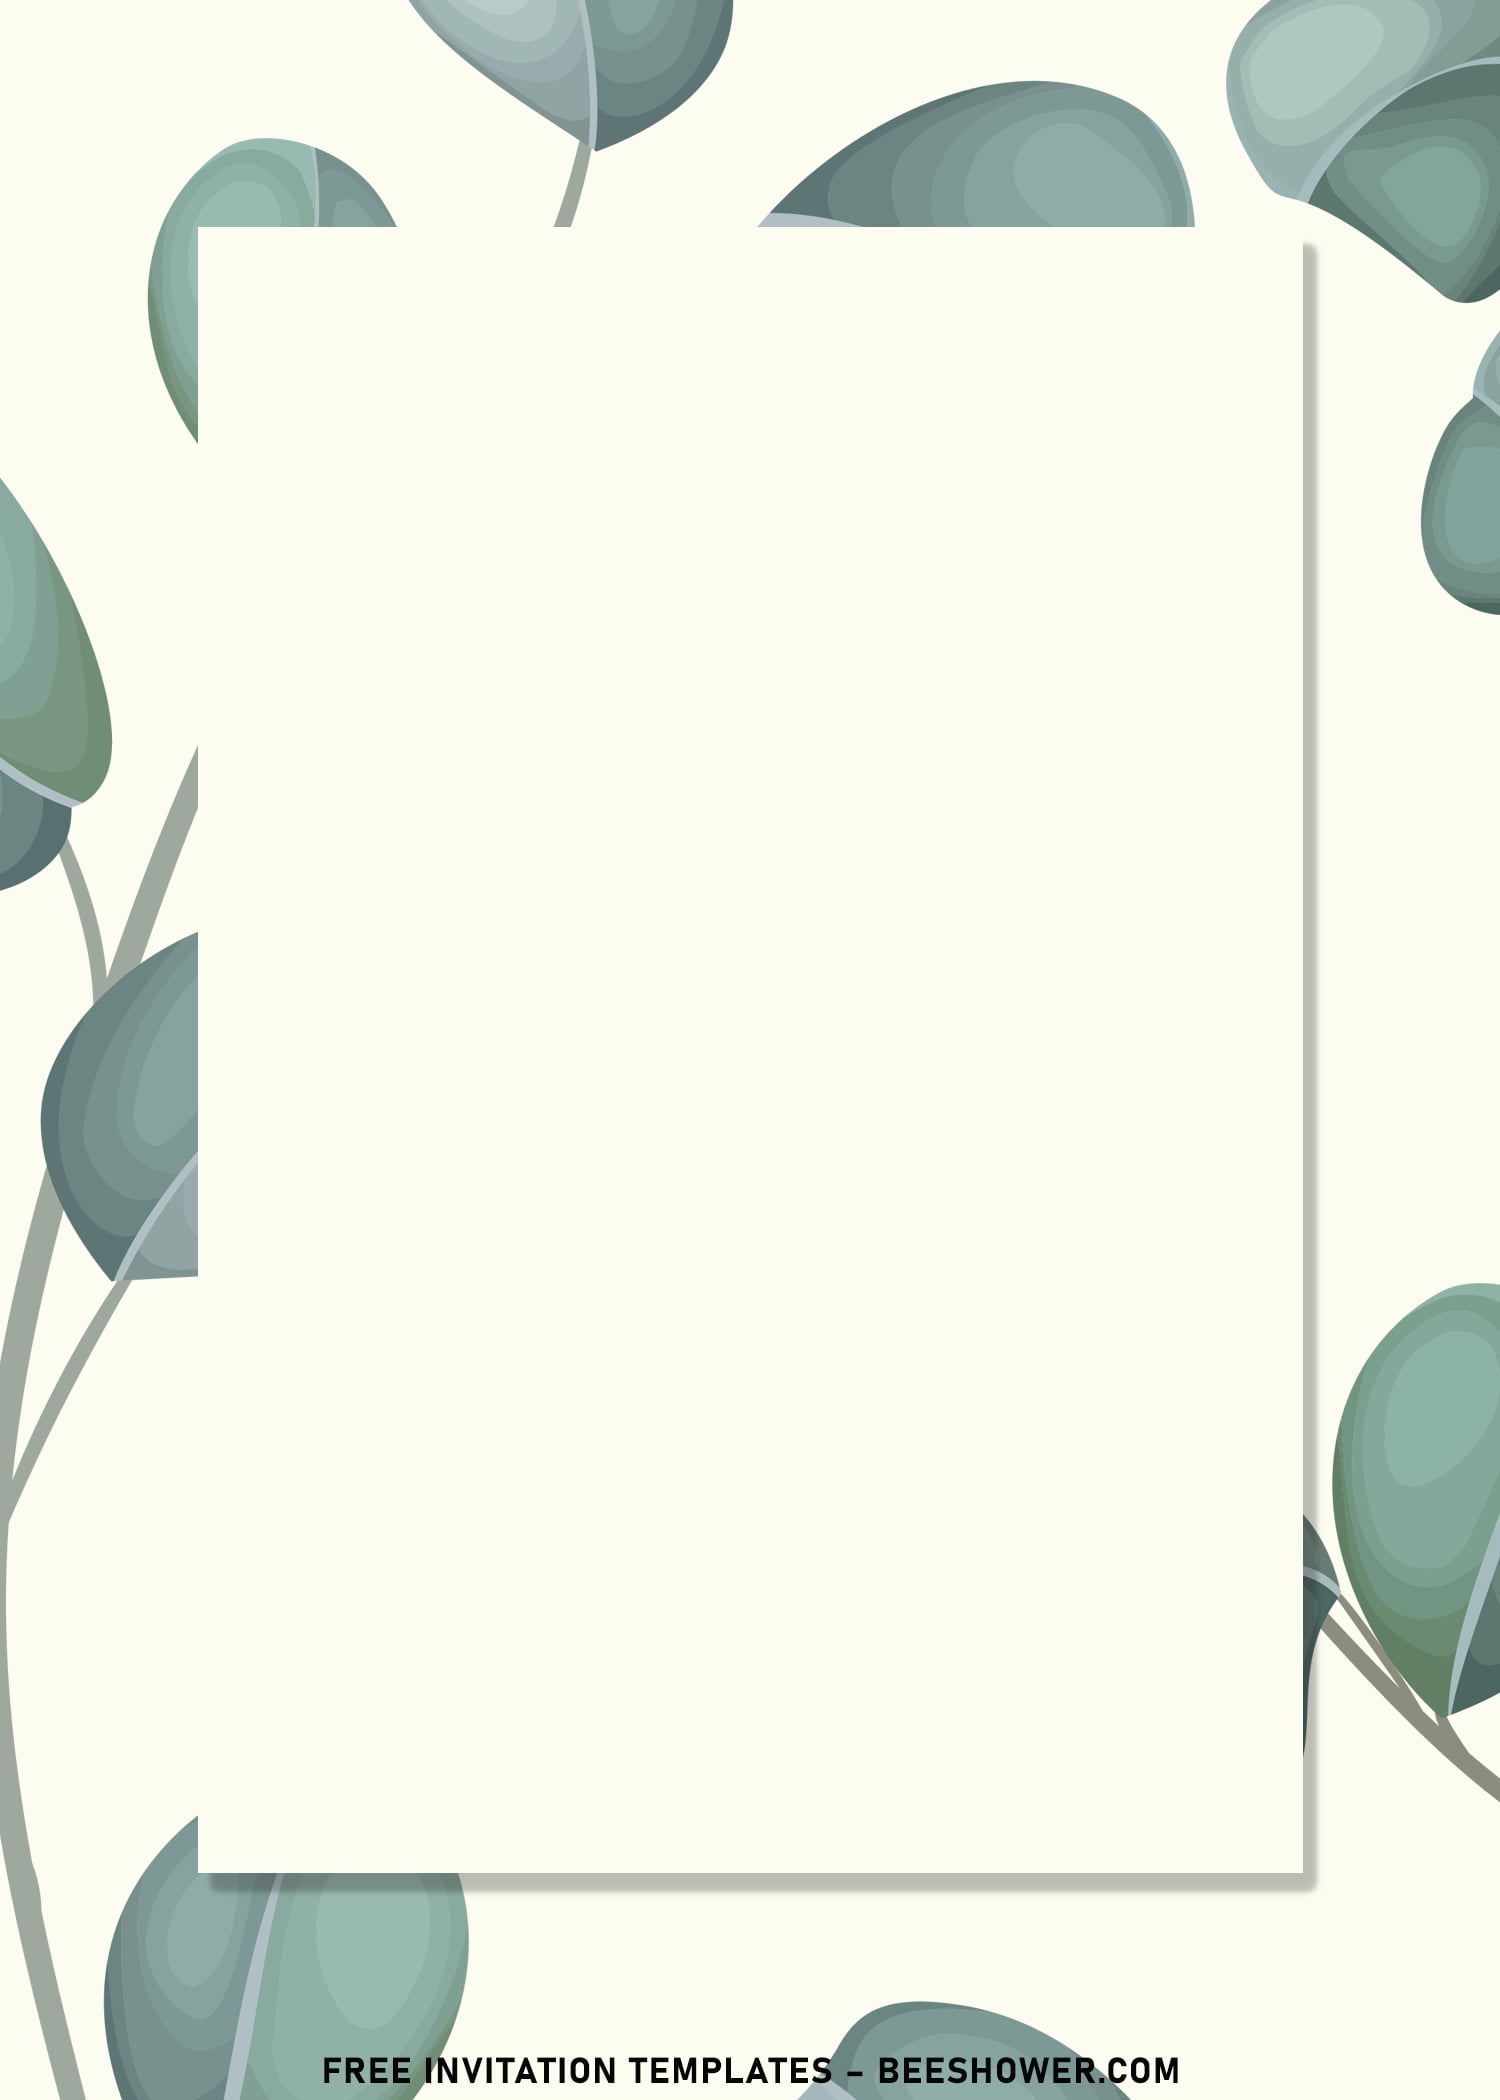 Download 8+ Watercolor Eucalyptus Birthday Invitation Templates | Beeshower